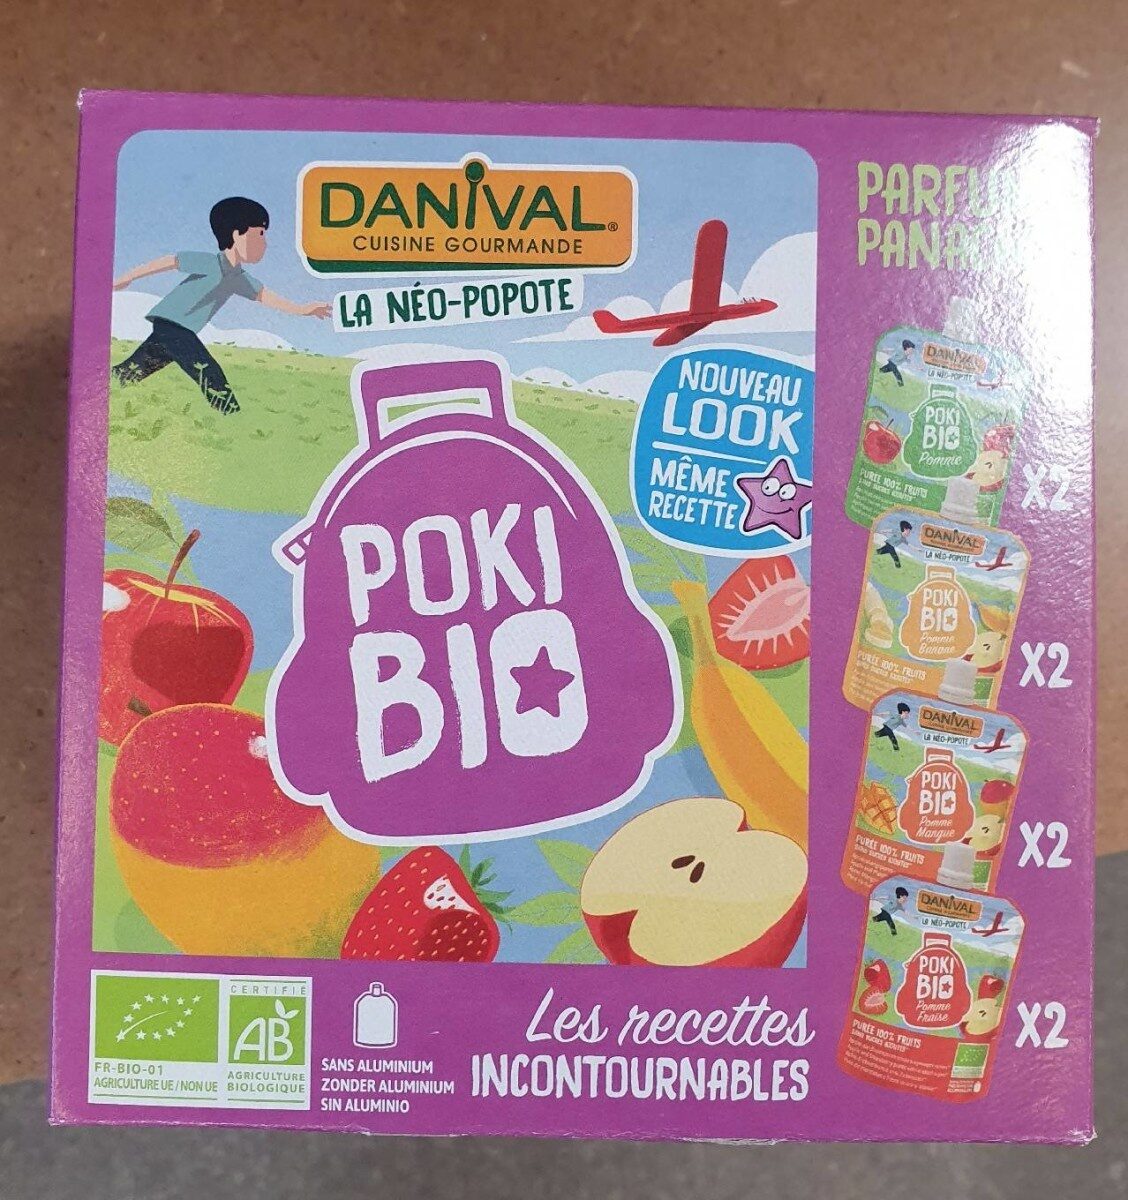 Danival poli bio - Product - fr